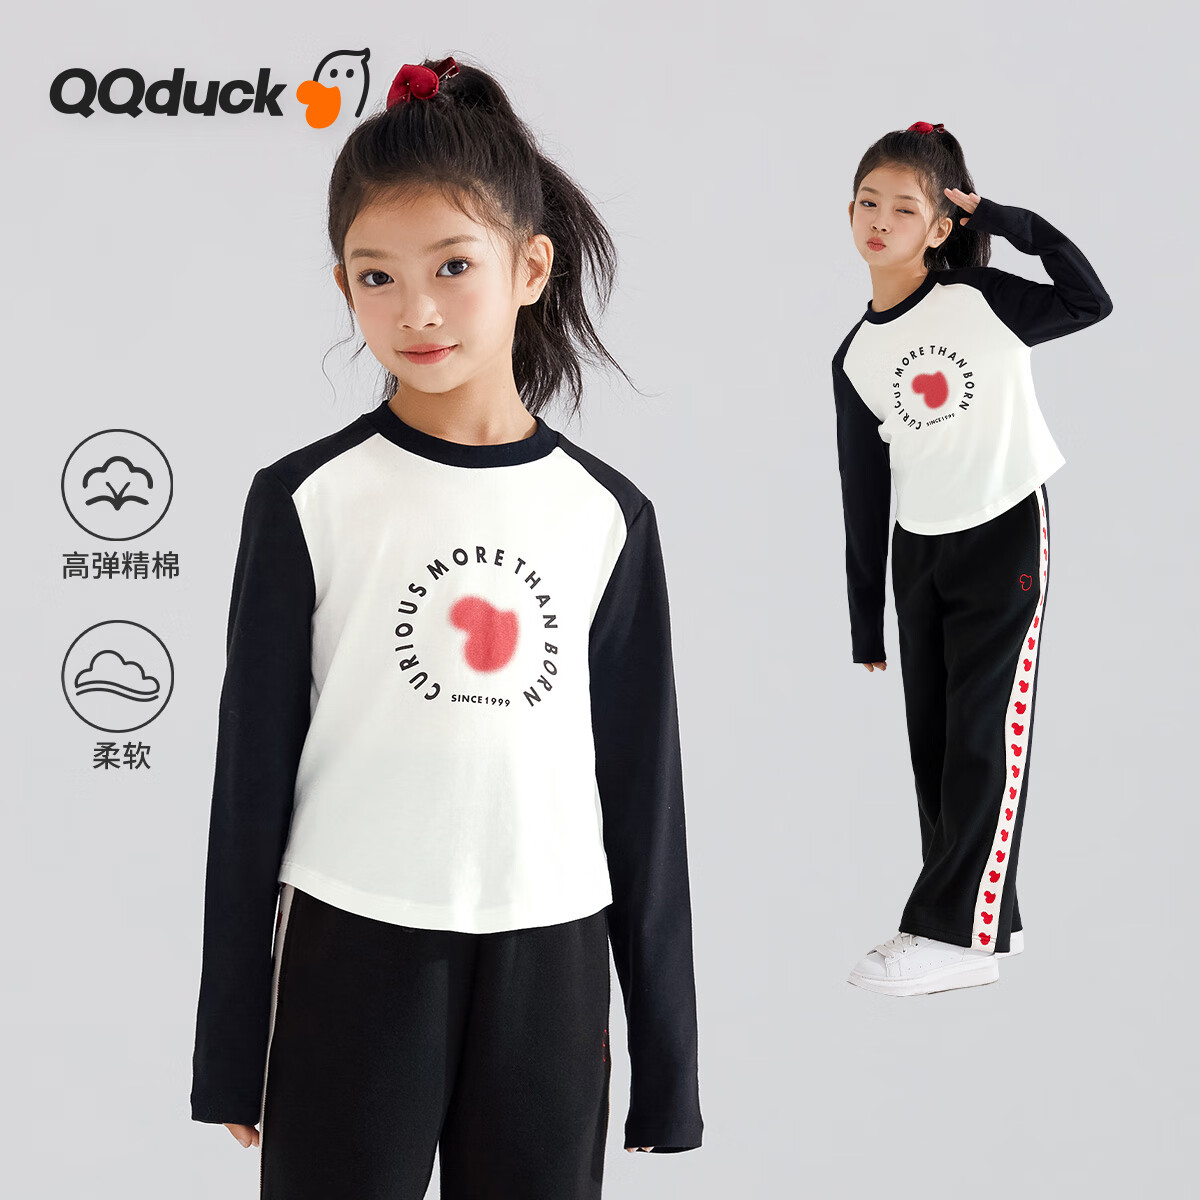 QQ duck 可可鸭 童装儿童T恤长袖女童打底衫美式短款上衣春装青少年衣服街舞